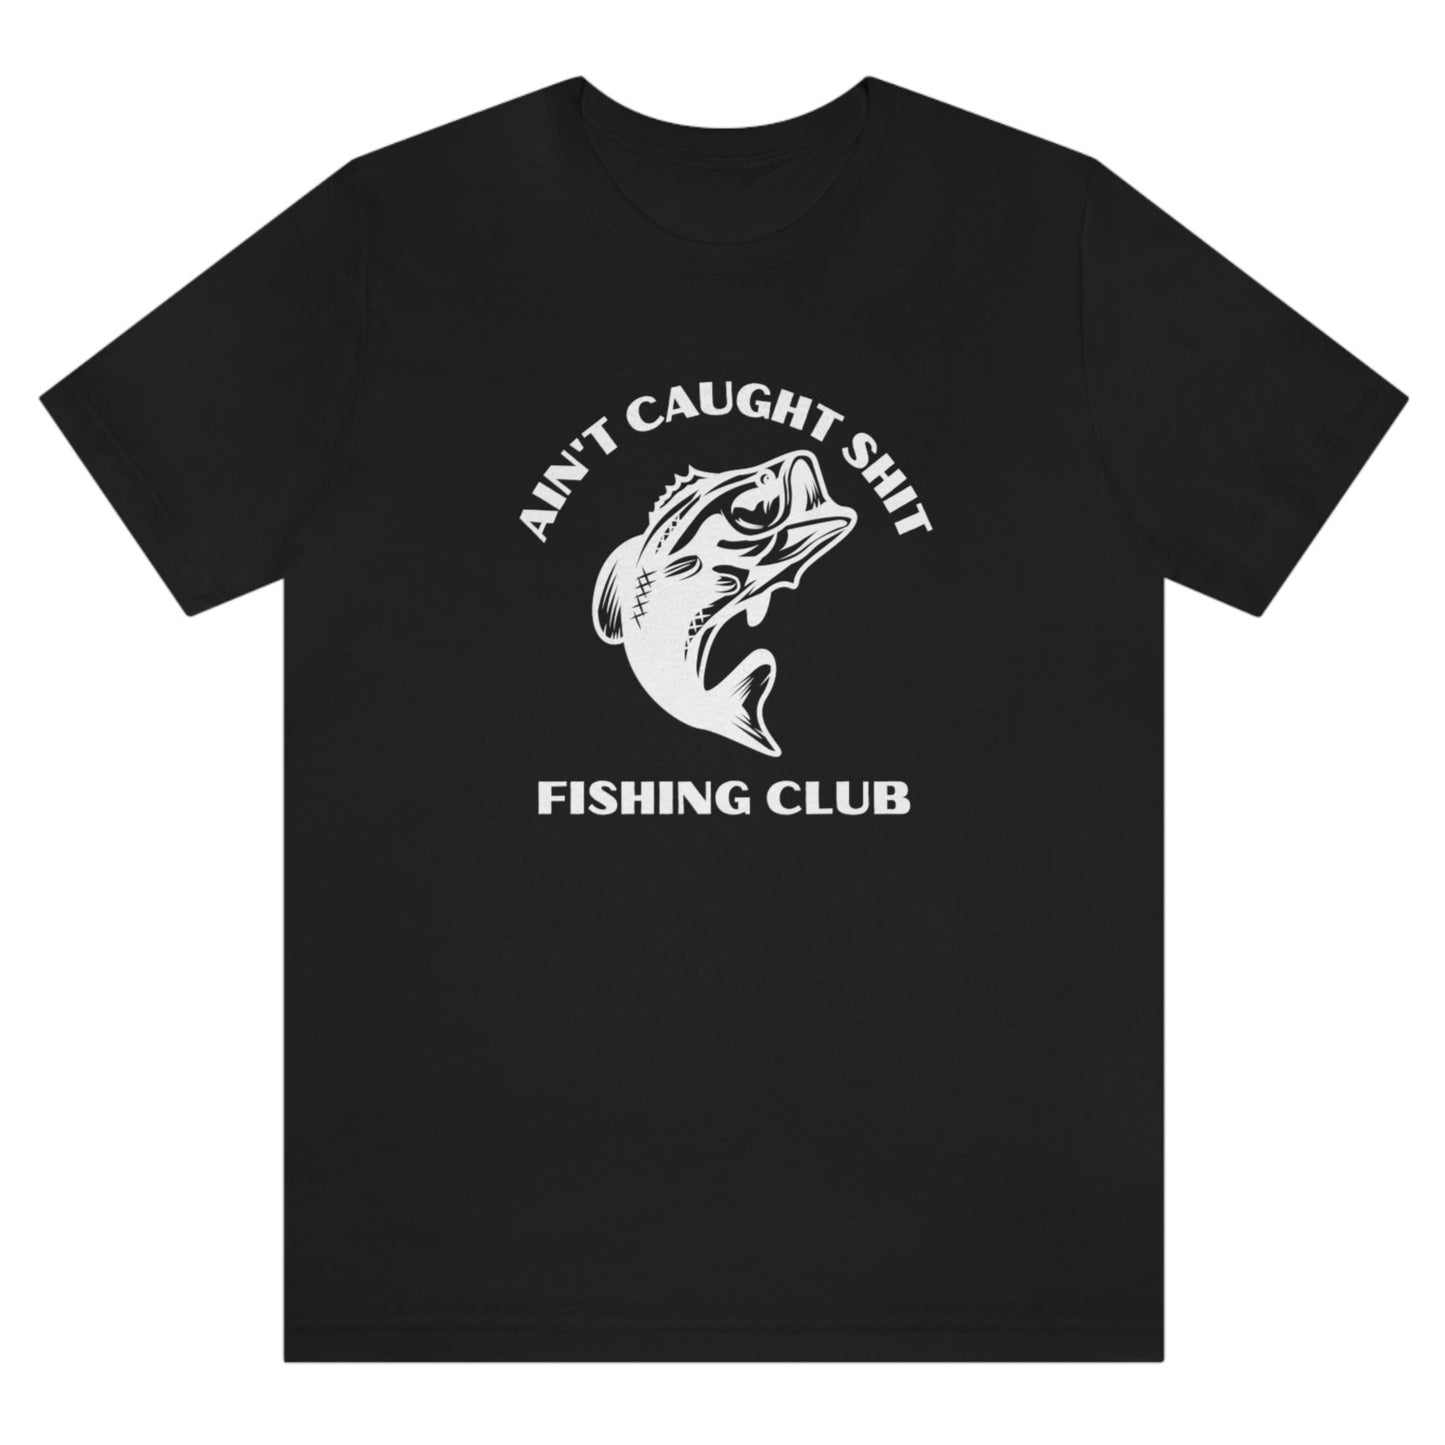 aint-caught-shit-fishing-club-black-t-shirt-mens-sports